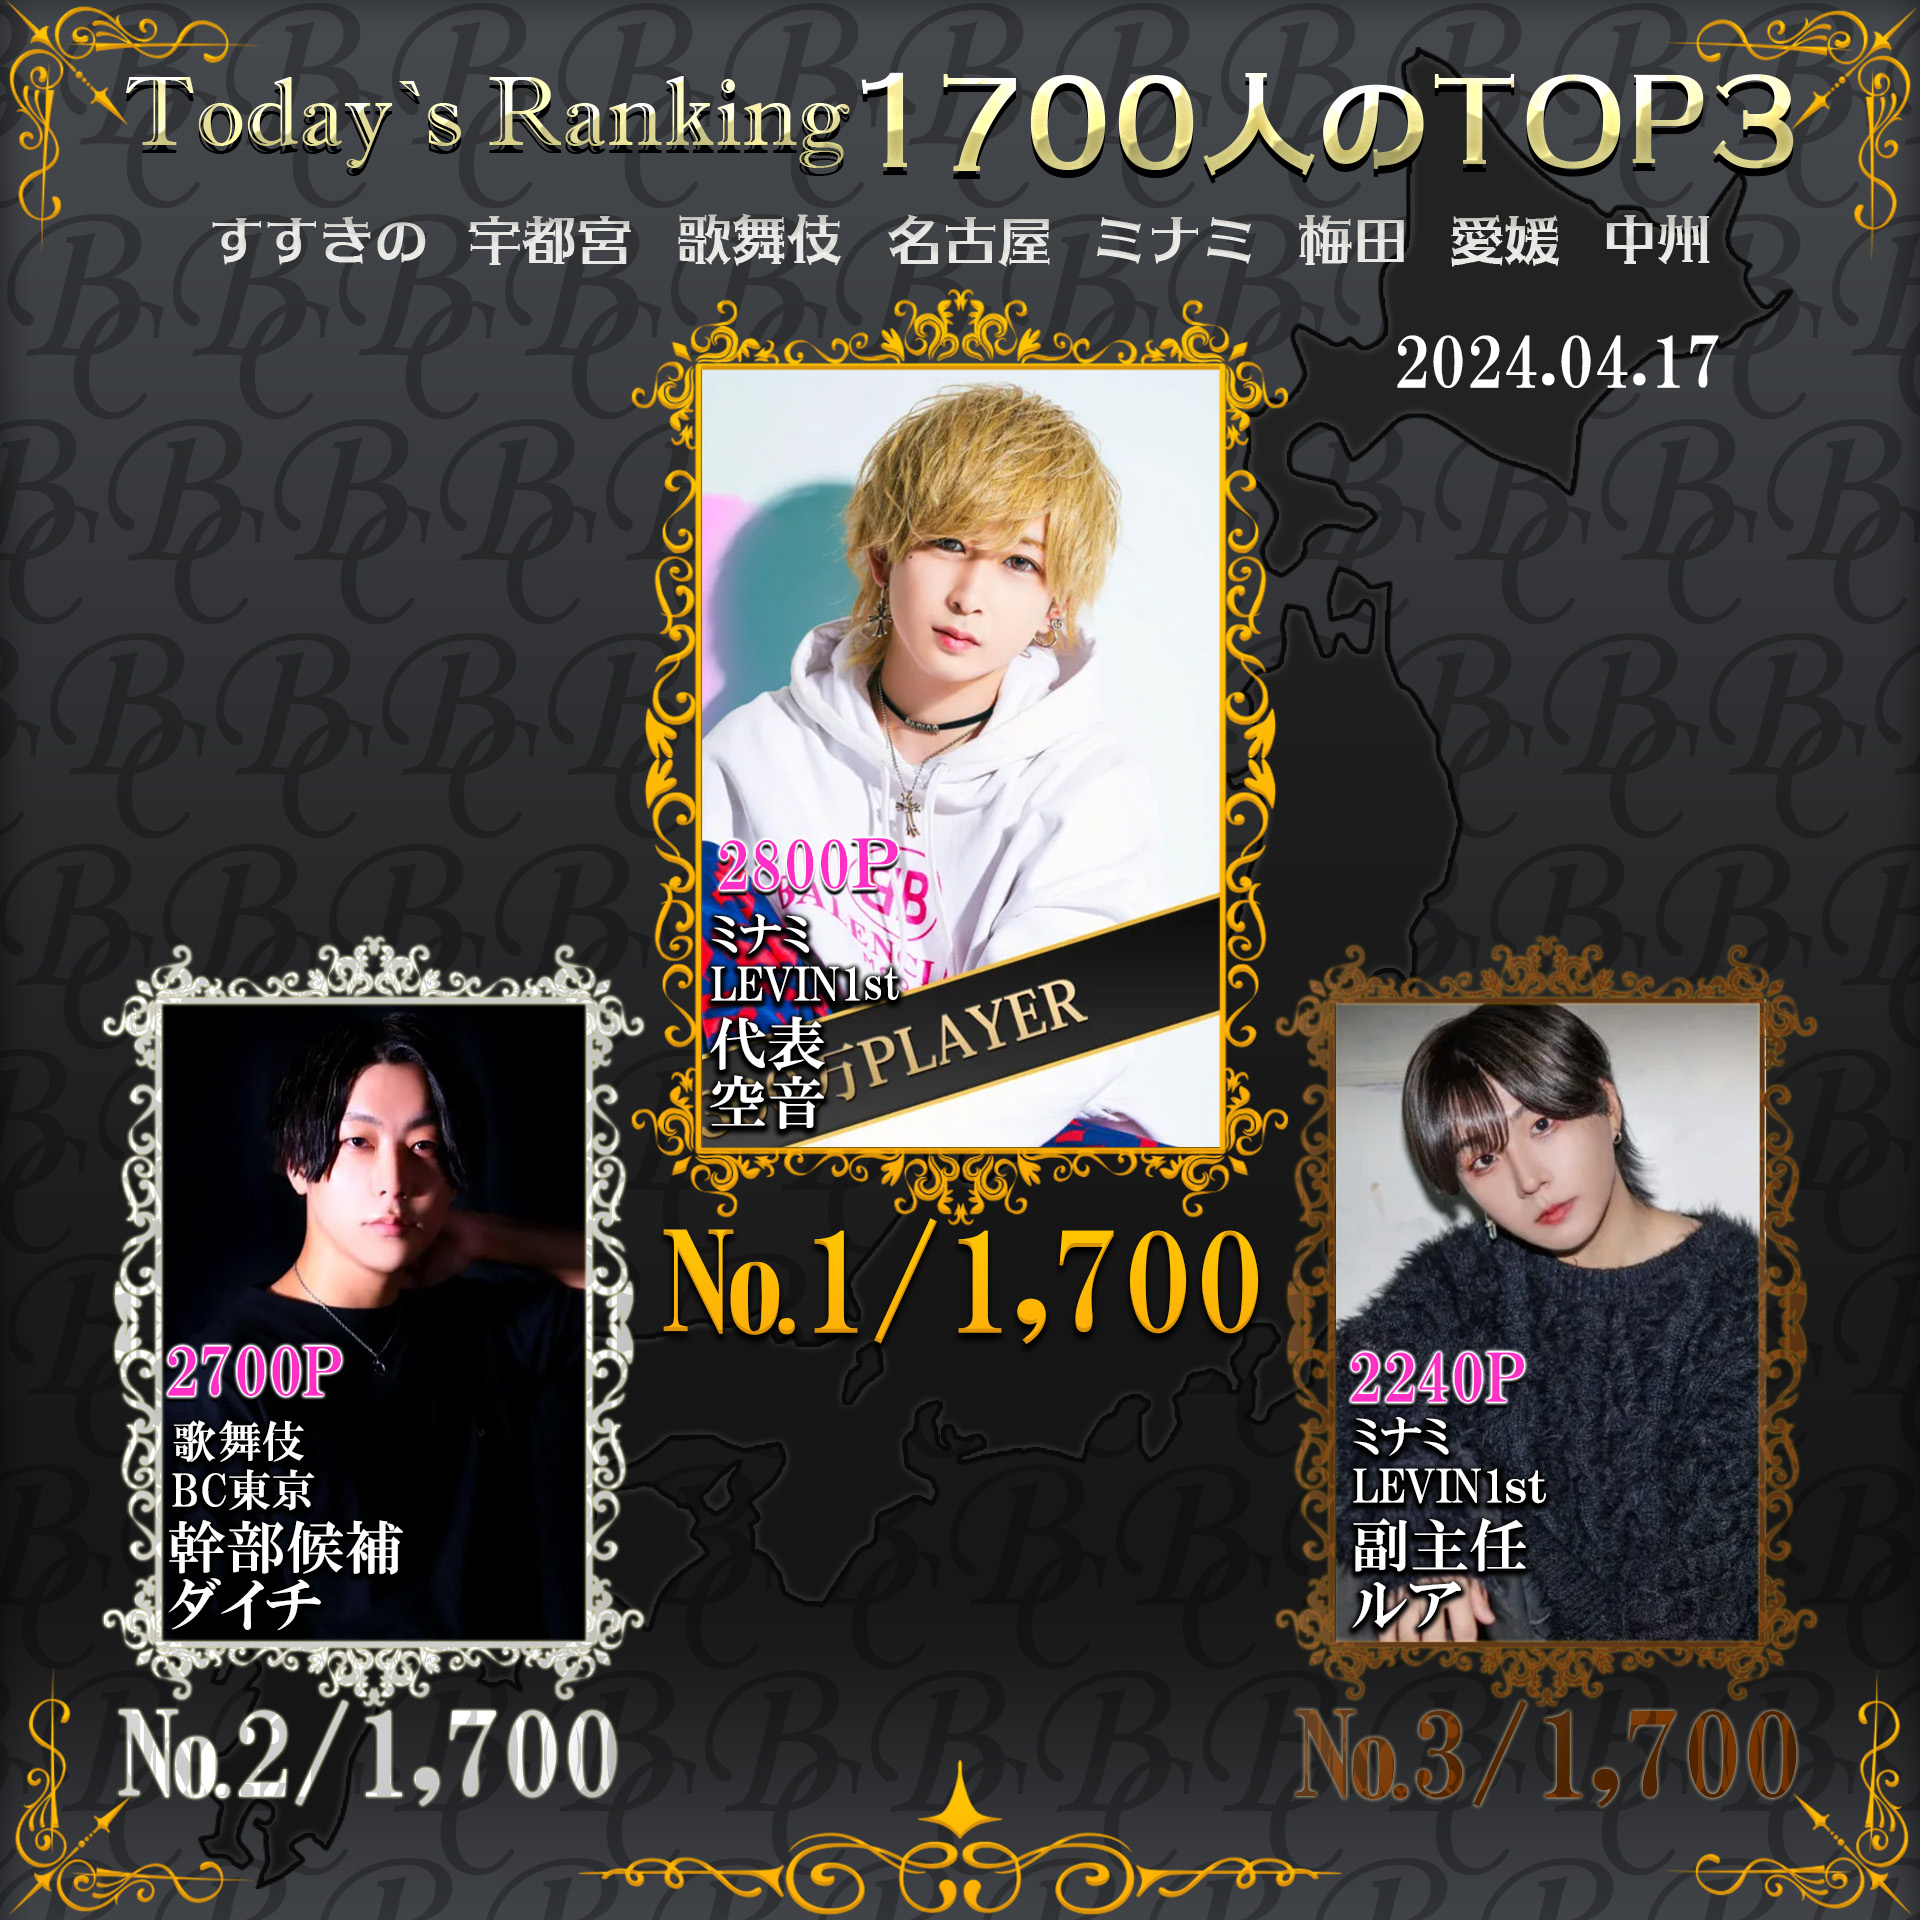 4/17 Today’s Ranking